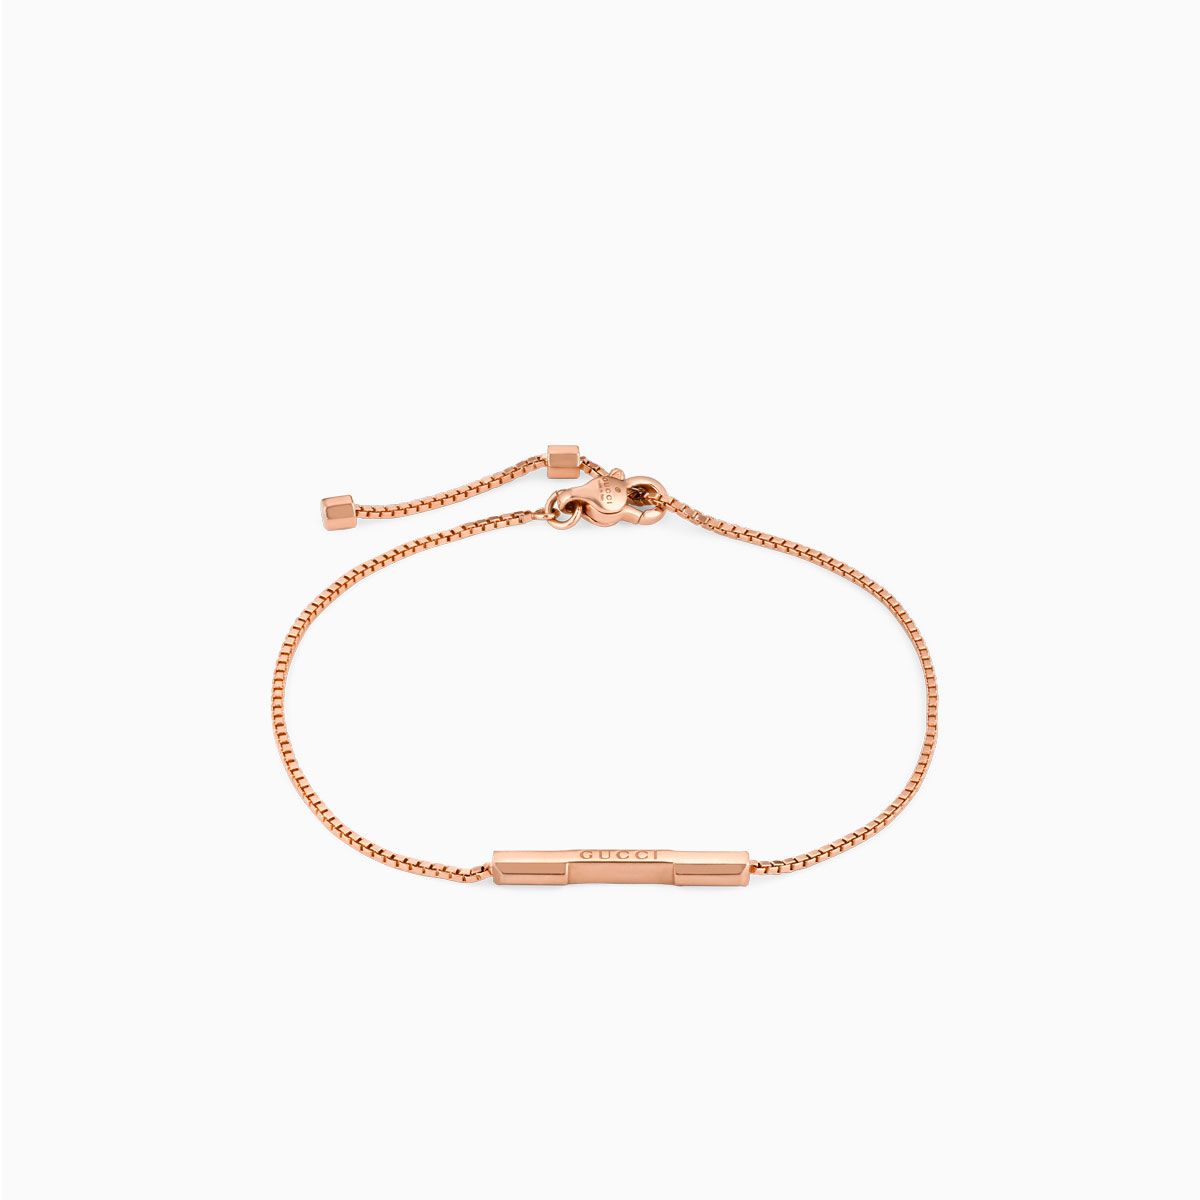 Bracelet Gucci Link to Love pink gold